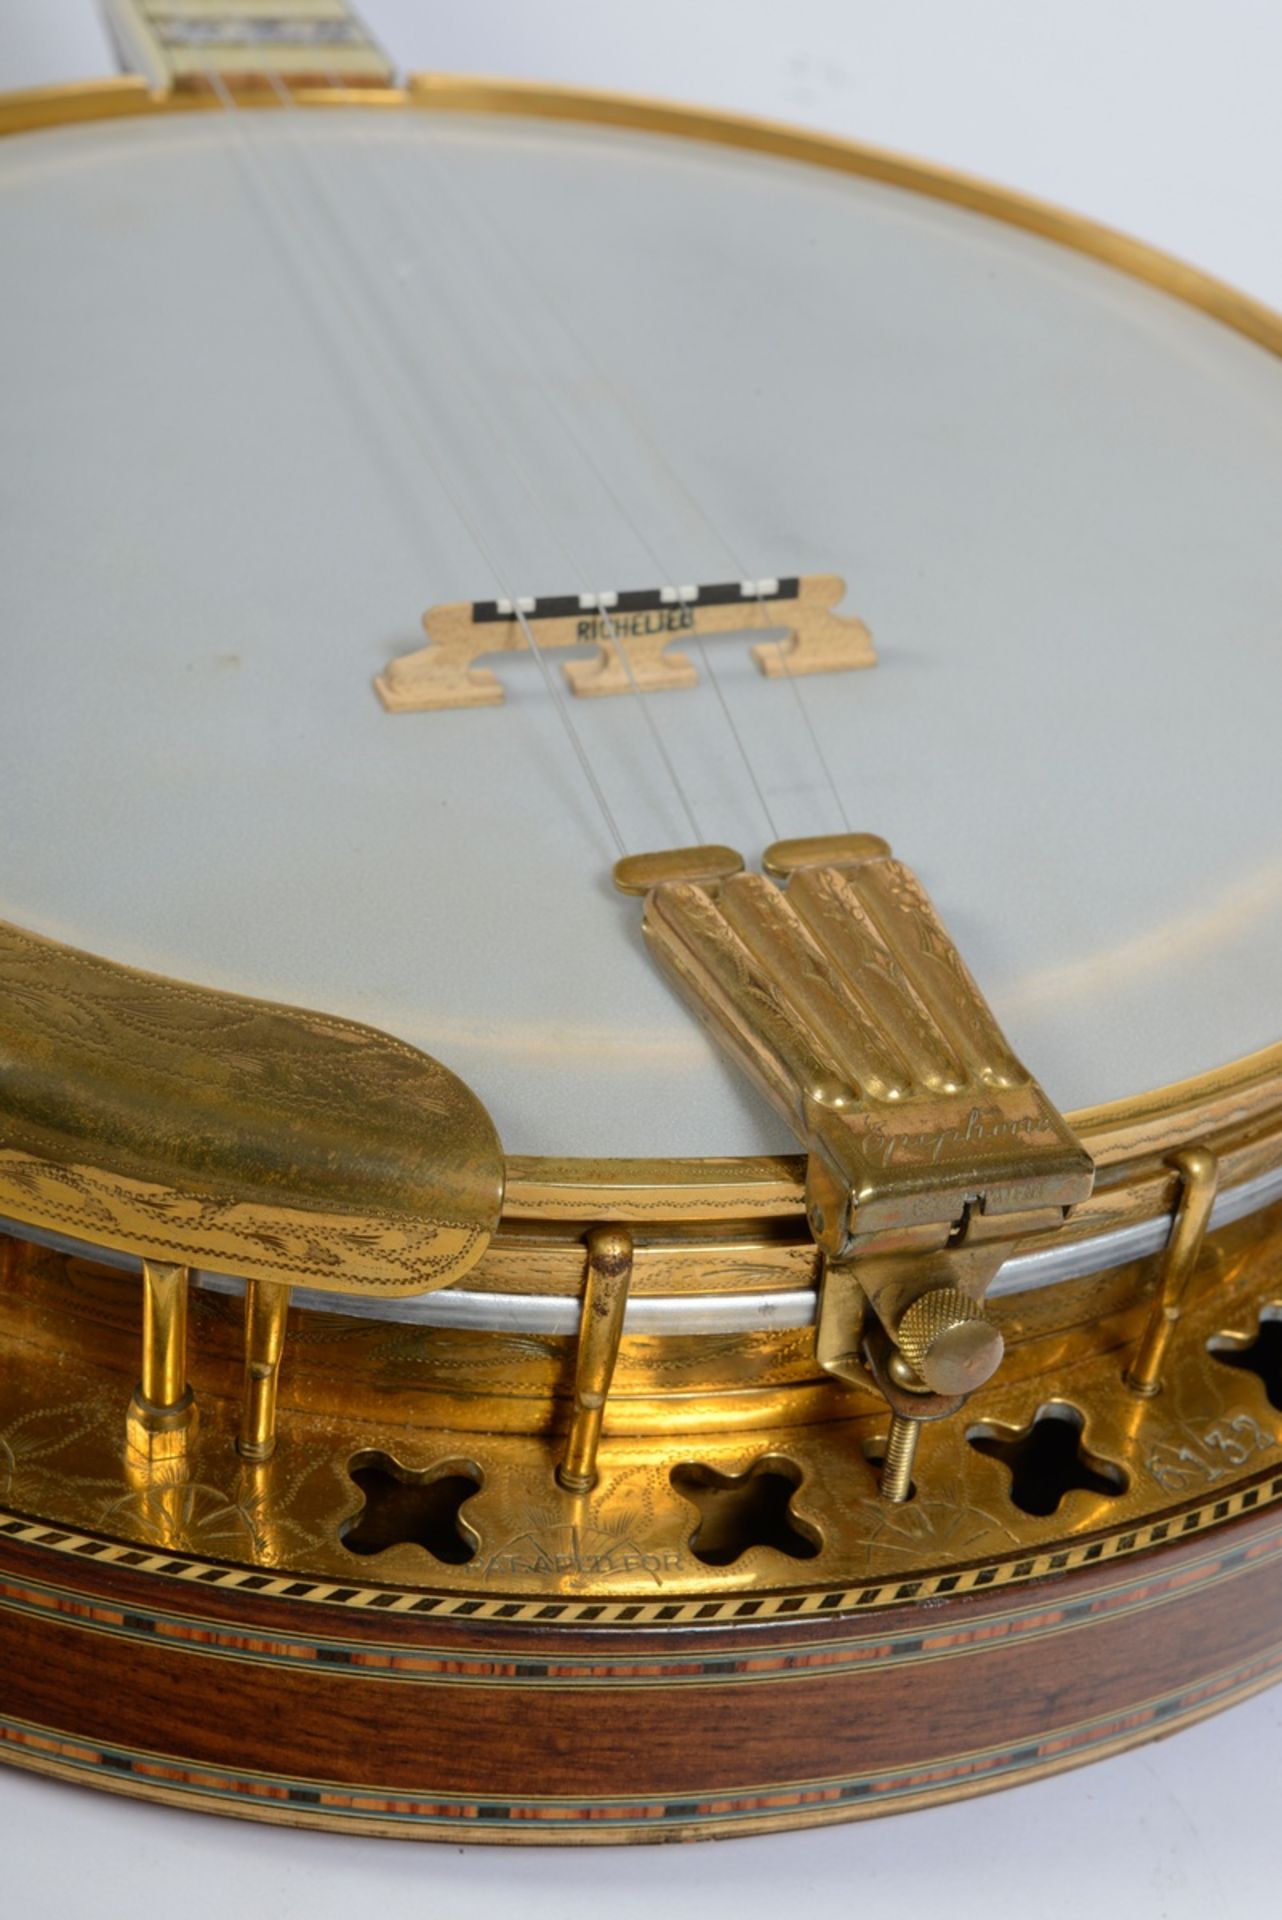 Tenor Banjo, Epiphone Banjo Company, House of Strathopoulo Inc. New York, model Recording Art Conce - Image 14 of 24